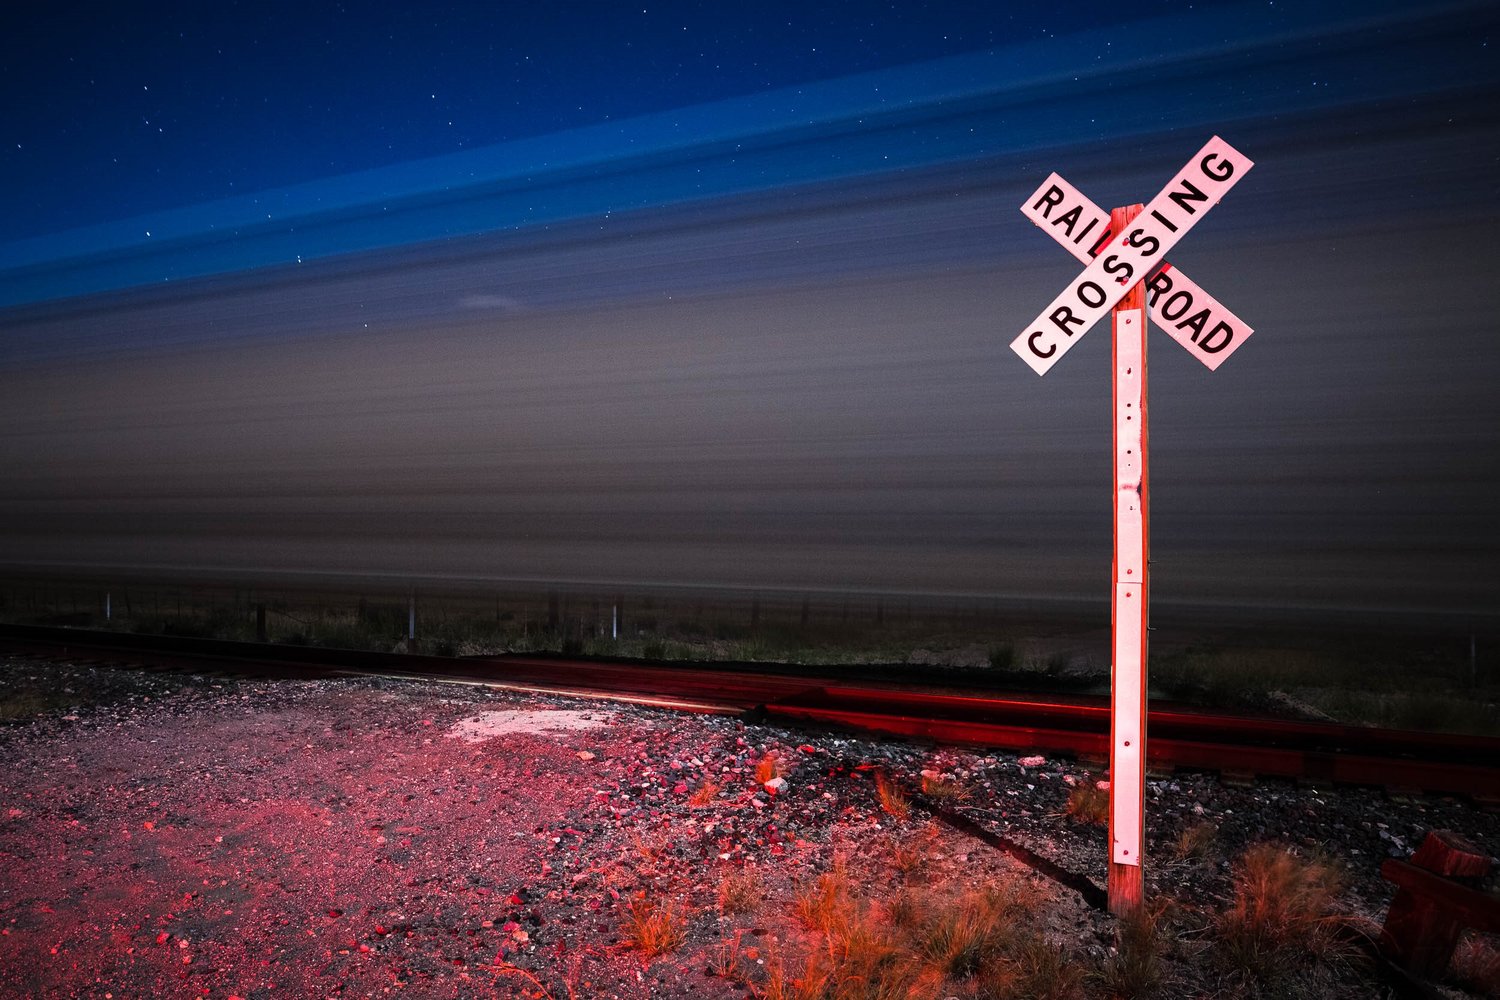 "Railroad Crossing" by Scott Martin